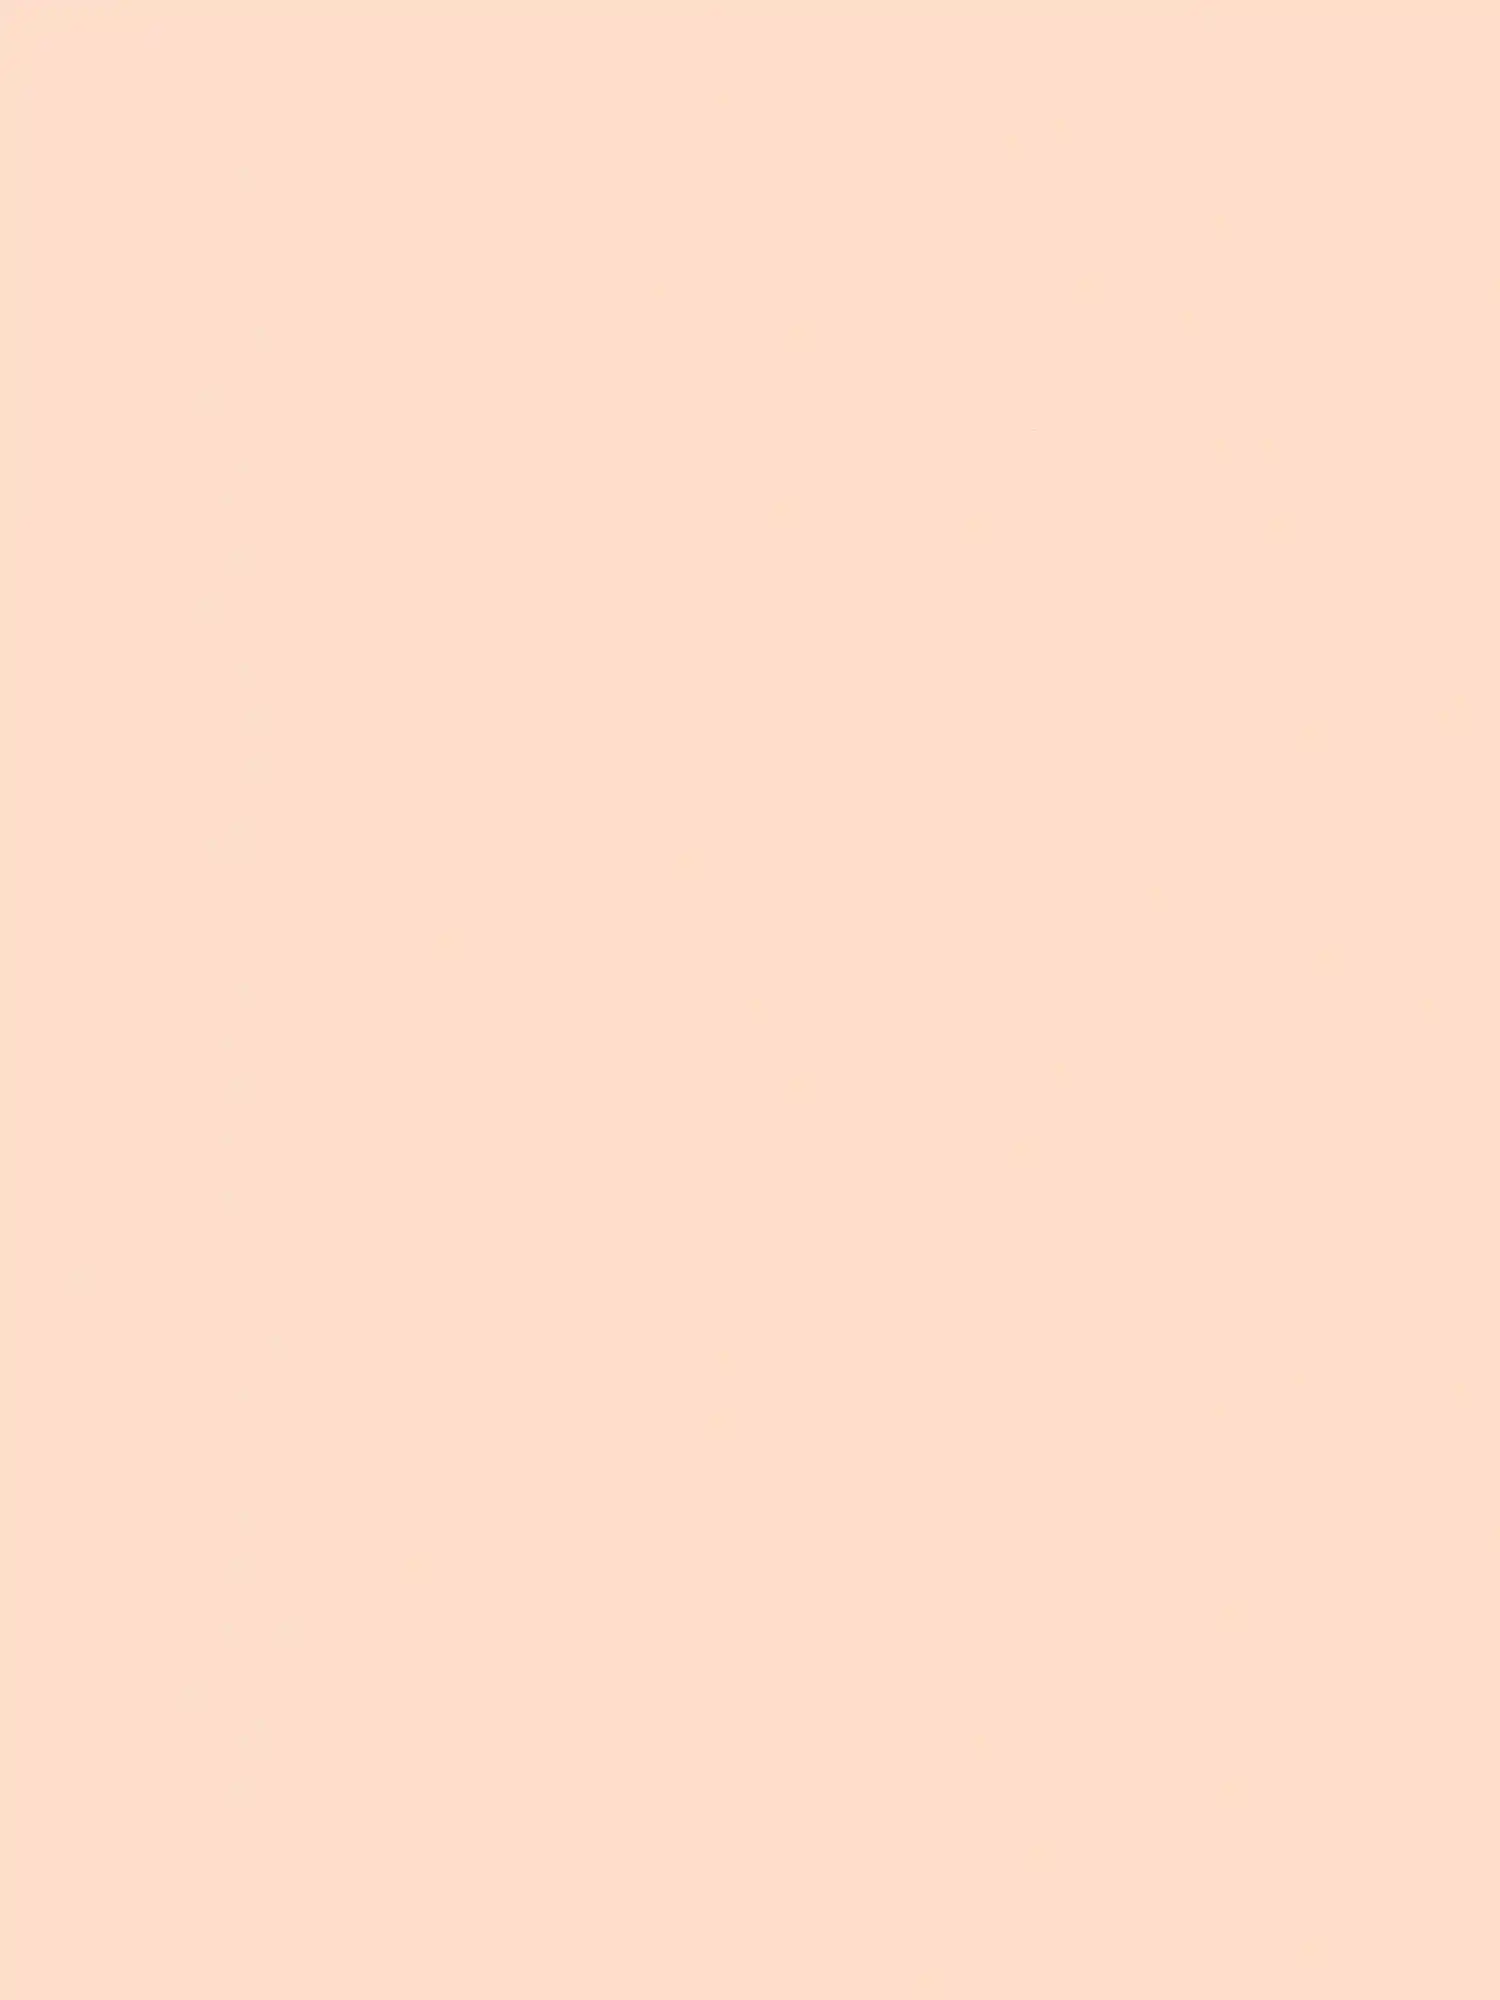 Wallpaper plain with matte surface - cream, pink
